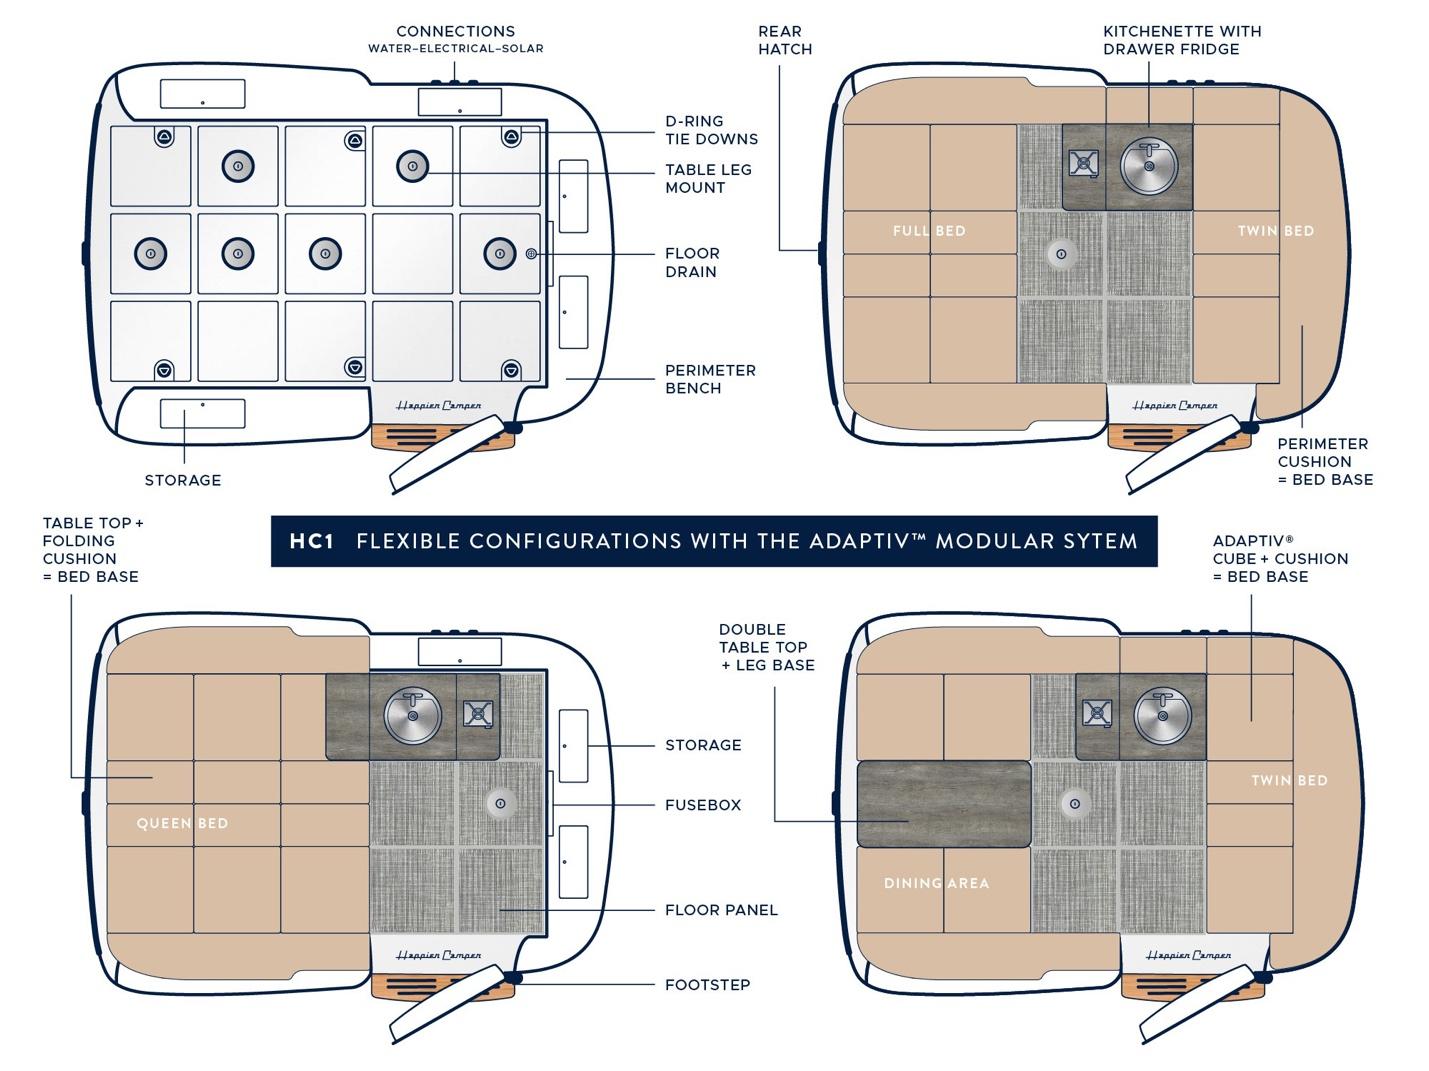 Floorplan of the Happier Camper HC1 Off-Grid pull-behind camper